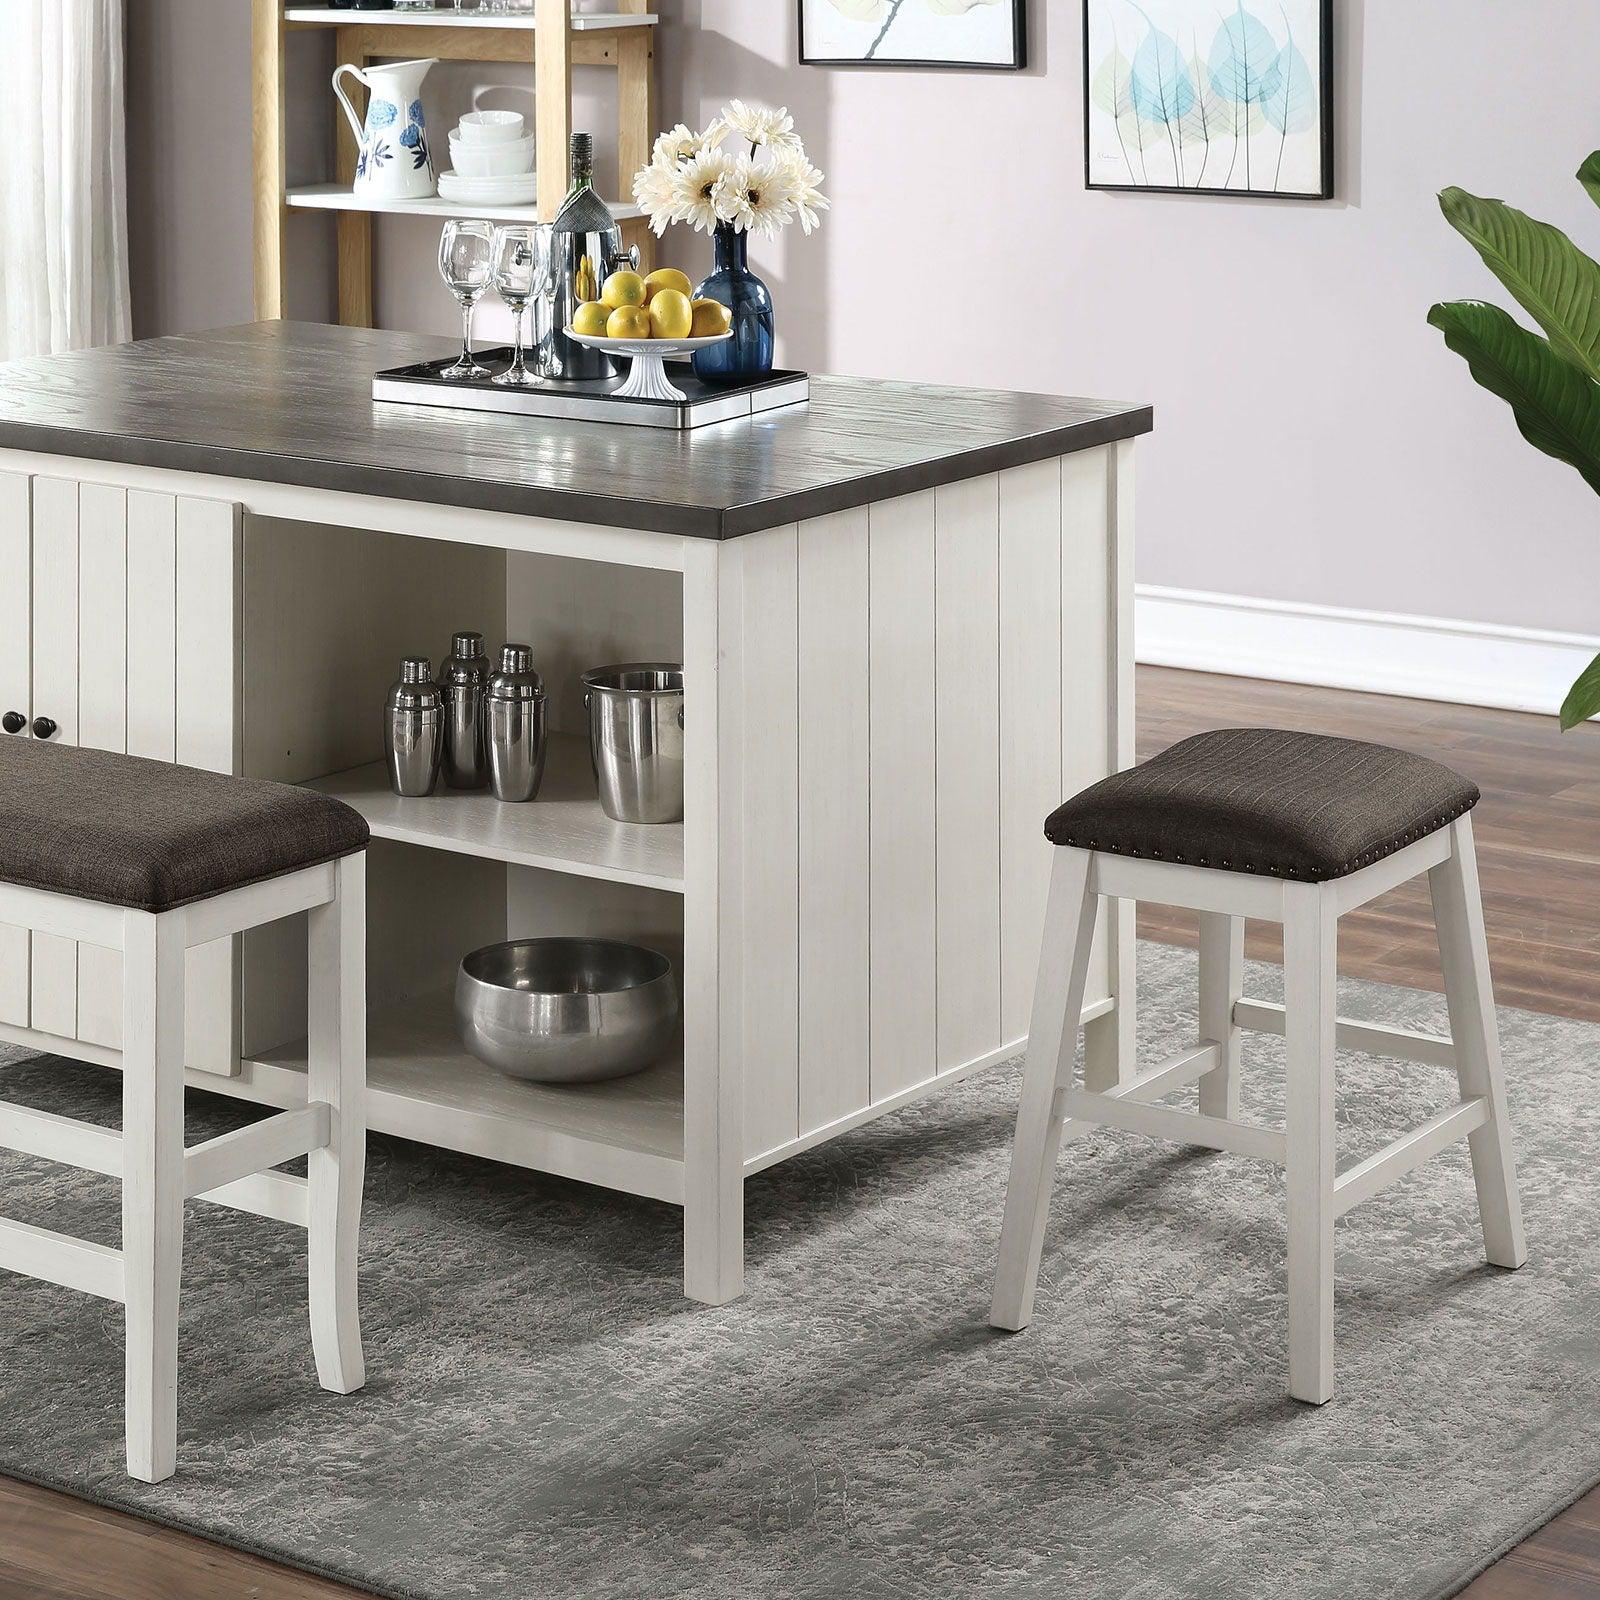 Furniture of America - Heidelberg - Counter Height Bench - Off-White / Dark Gray - 5th Avenue Furniture